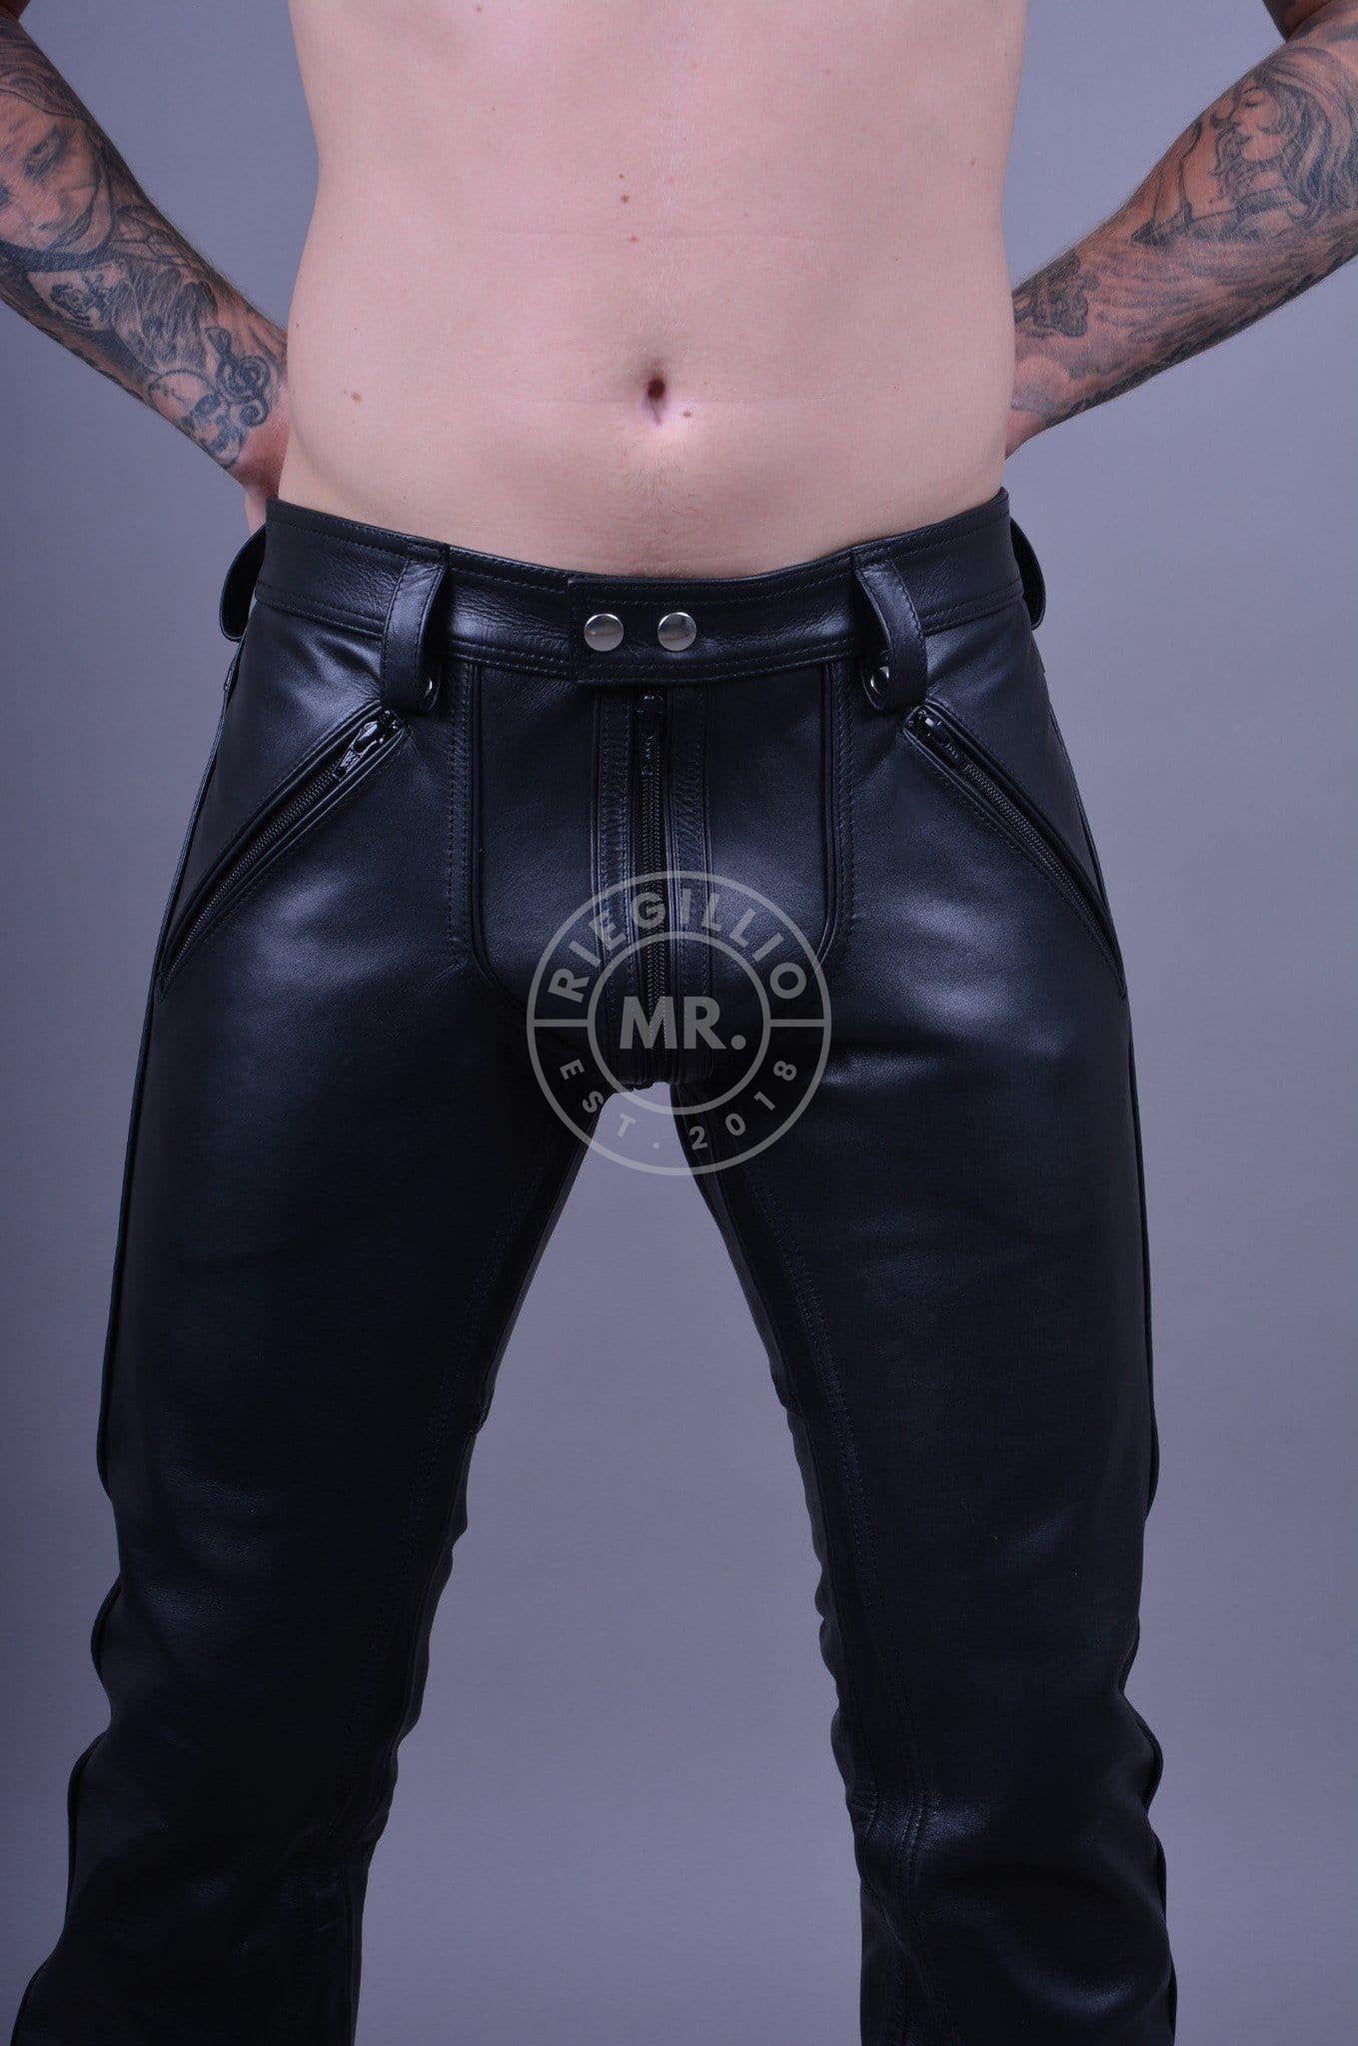 Mister B Leather FXXXer Jeans All Black at MR. Riegillio